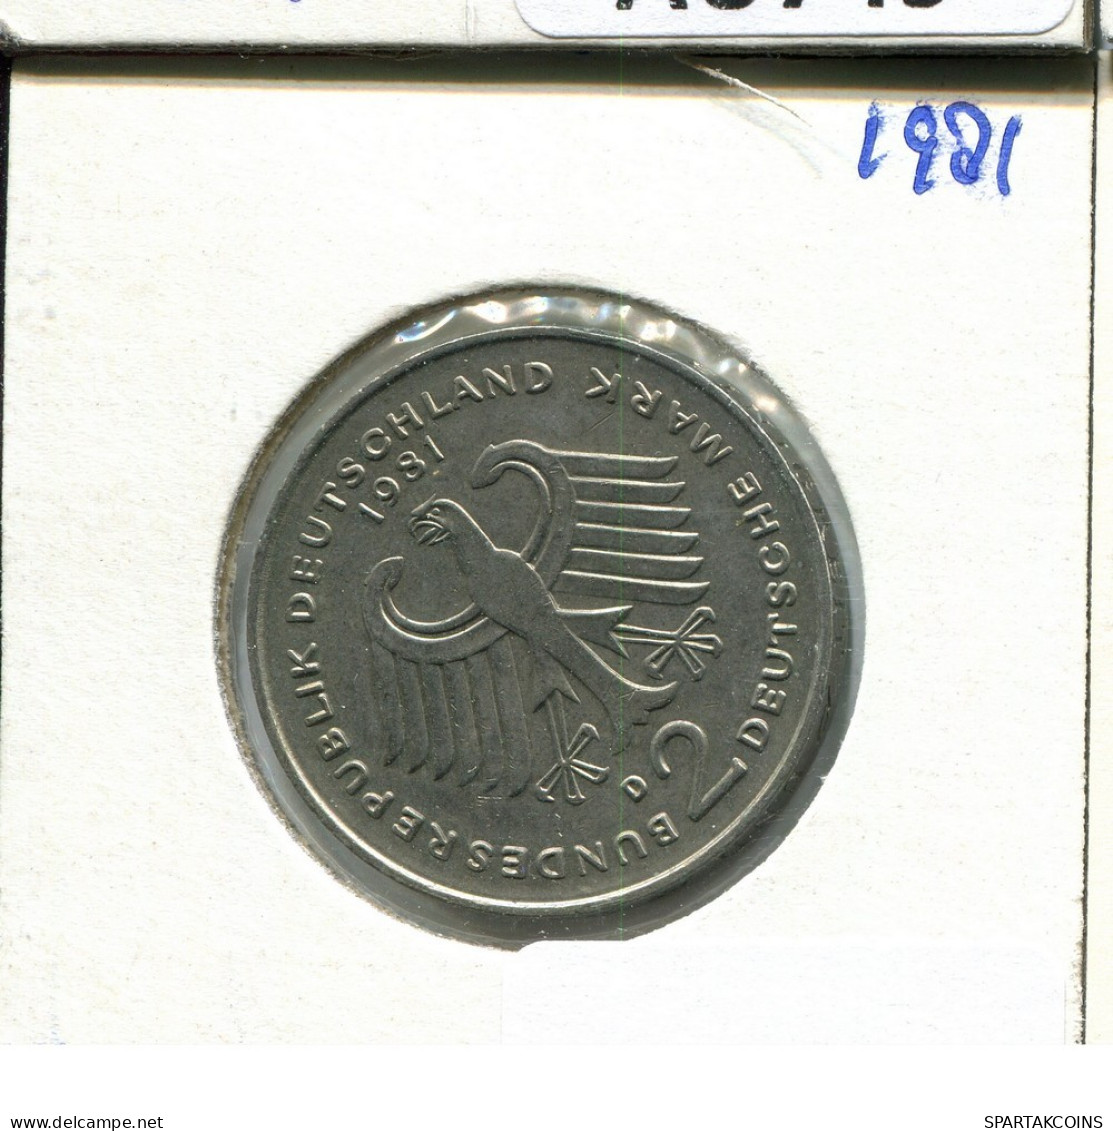 2 DM 1981 D K.SCHUMACHER WEST & UNIFIED GERMANY Coin #AU750.U.A - 2 Mark